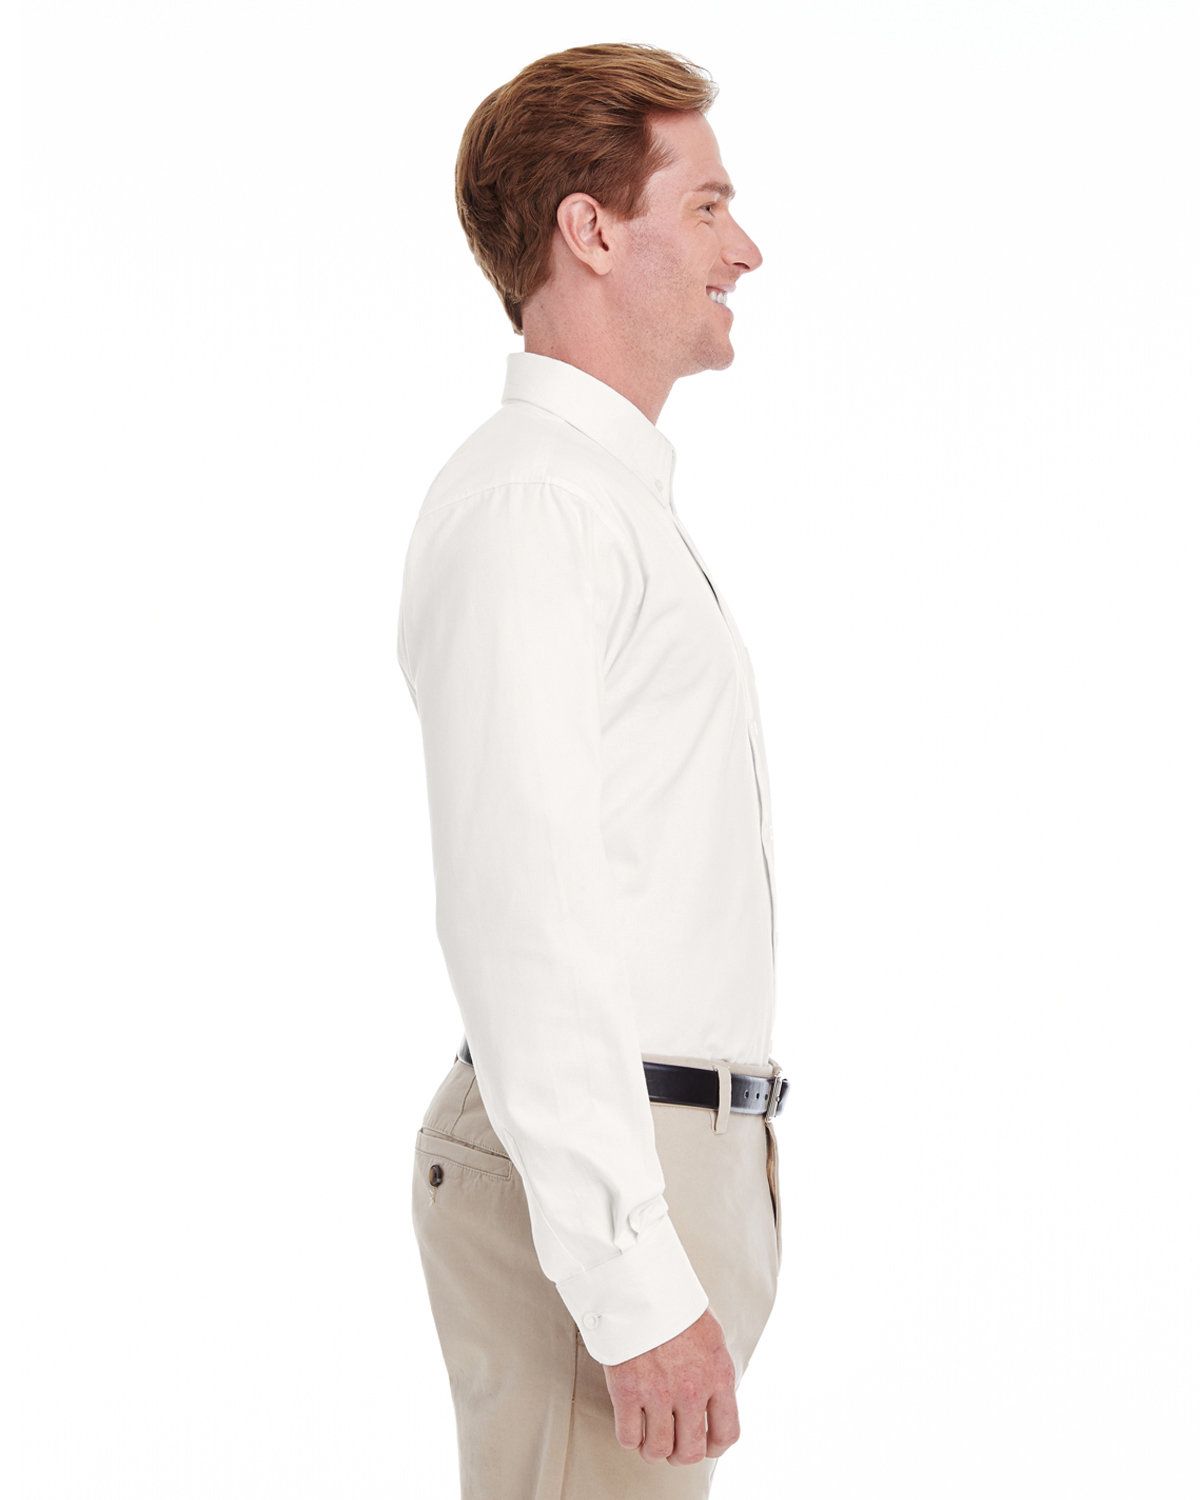 'Harriton M581T Men's Tall Foundation Cotton Long-Sleeve Twill Shirt with Teflon'